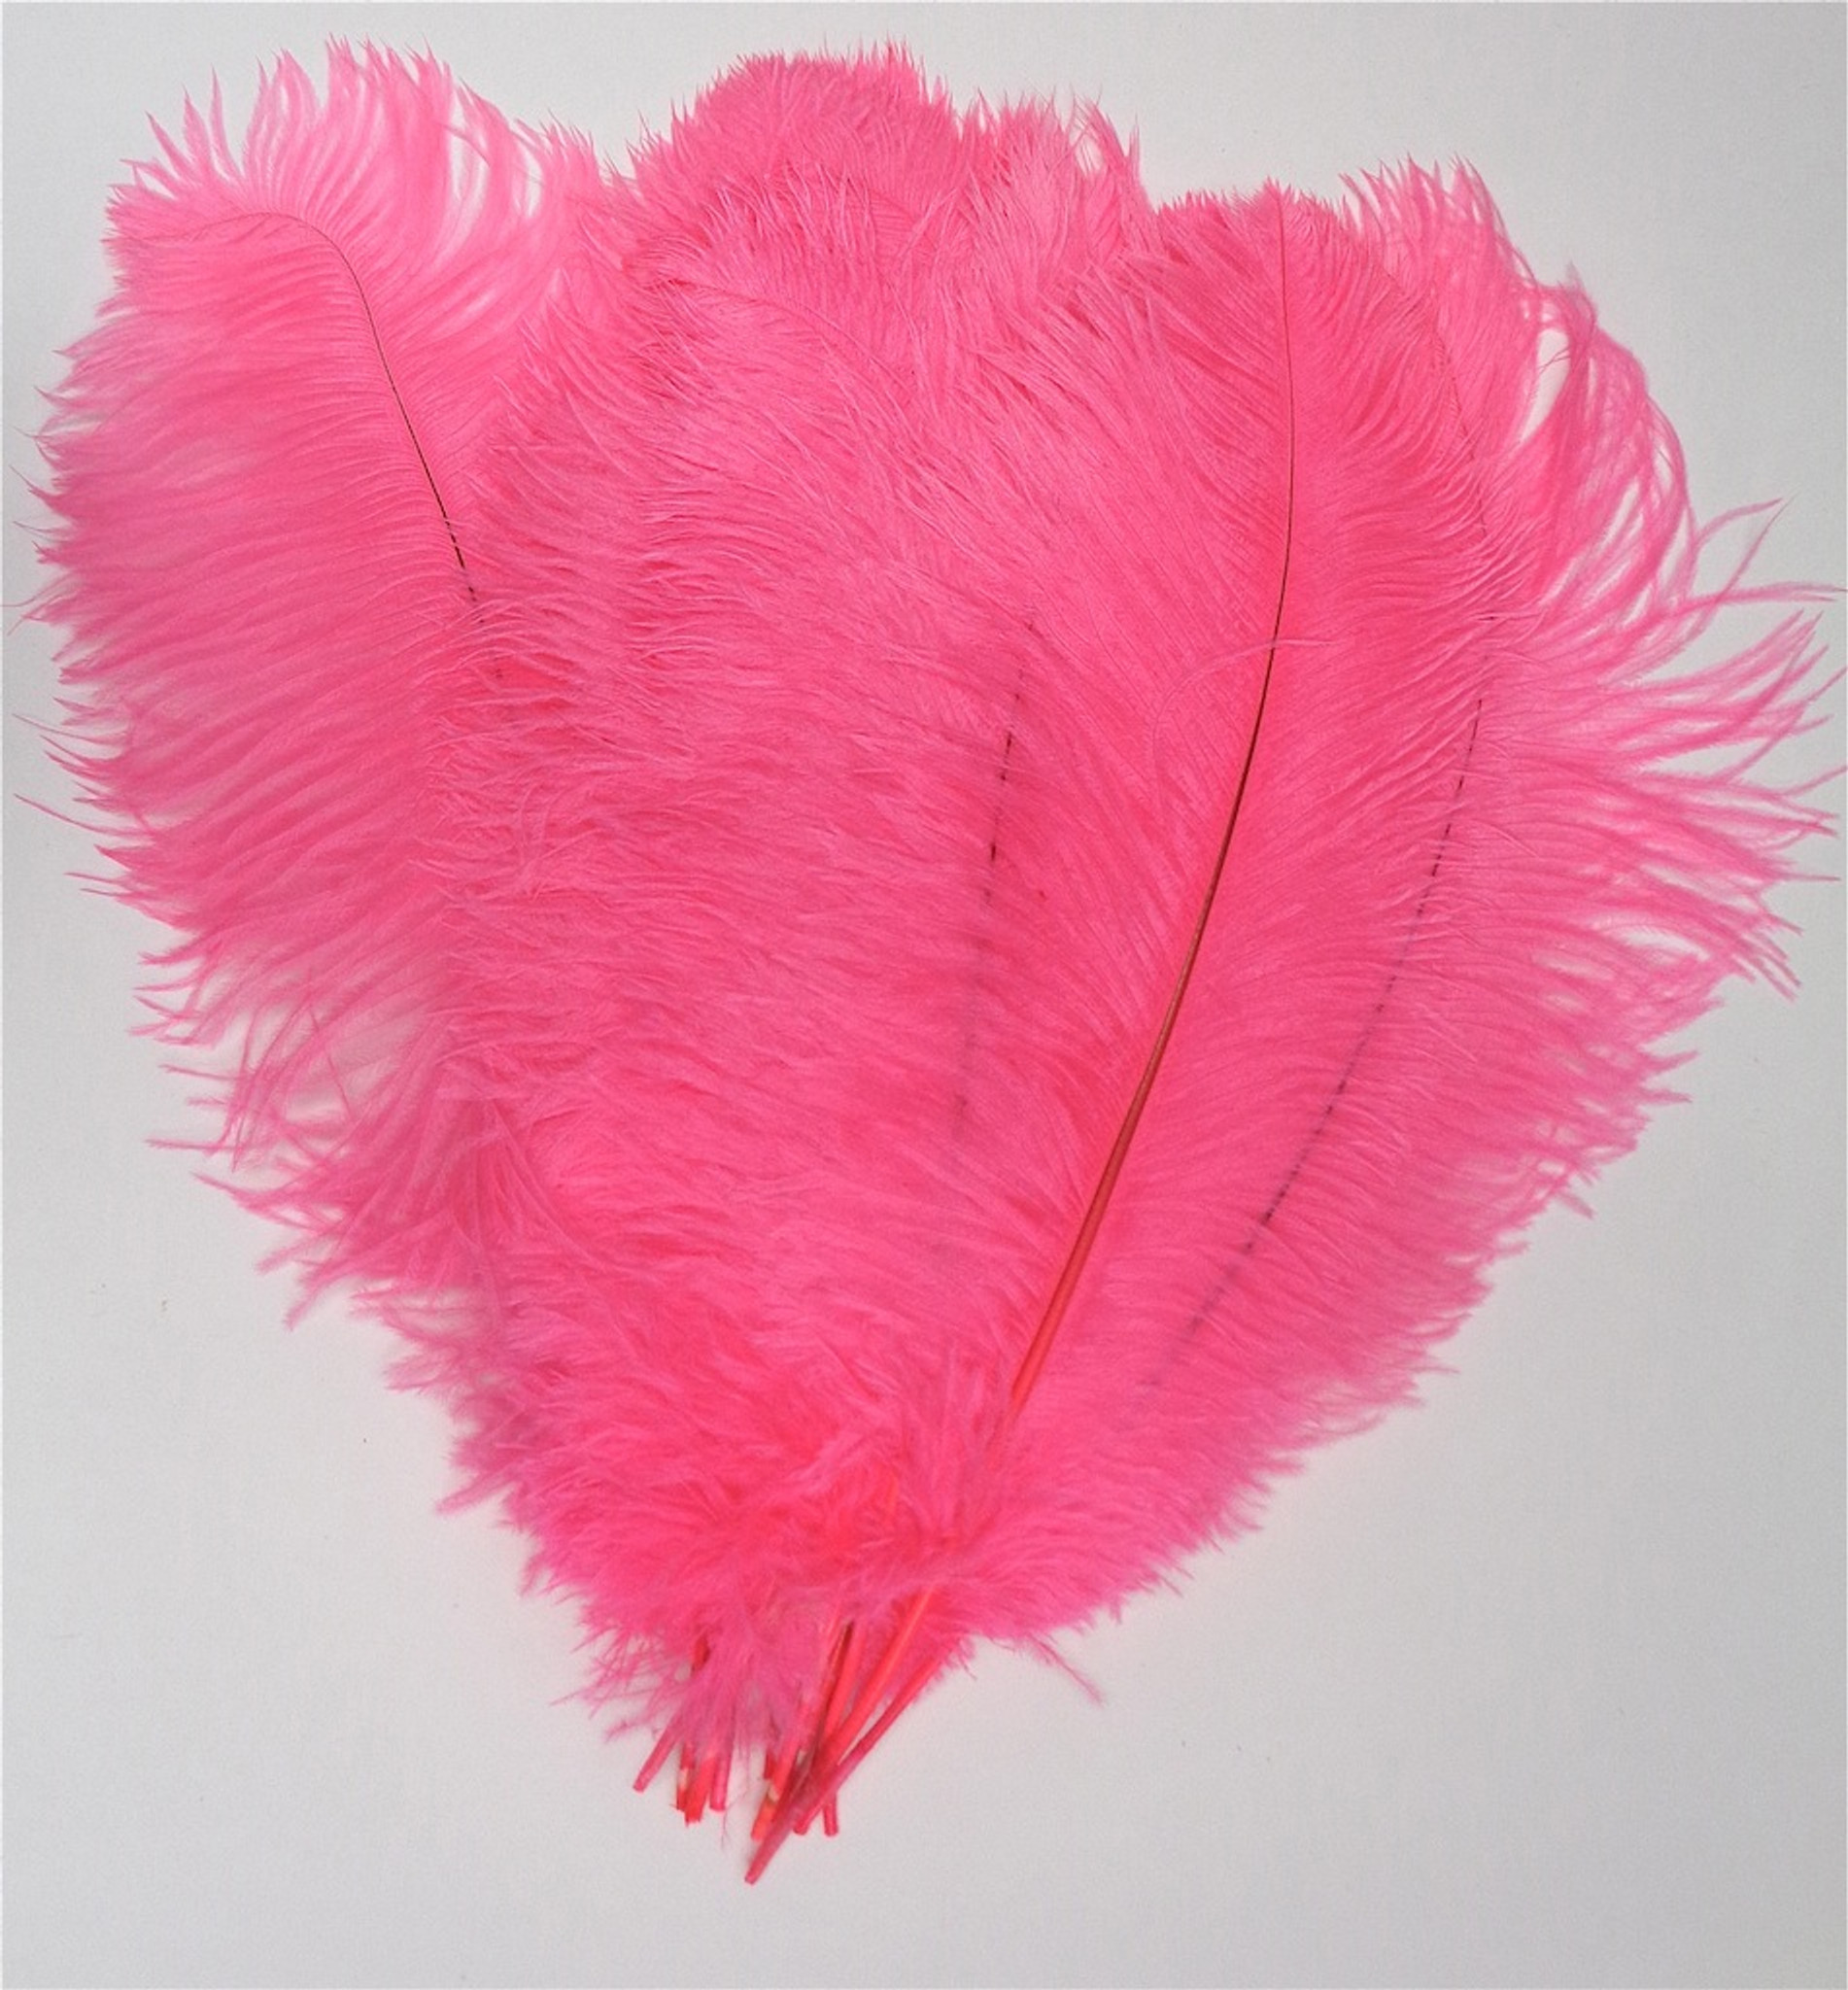 Nandu Ostrich Feathers 18 inch - Light Pink - Shi'dor